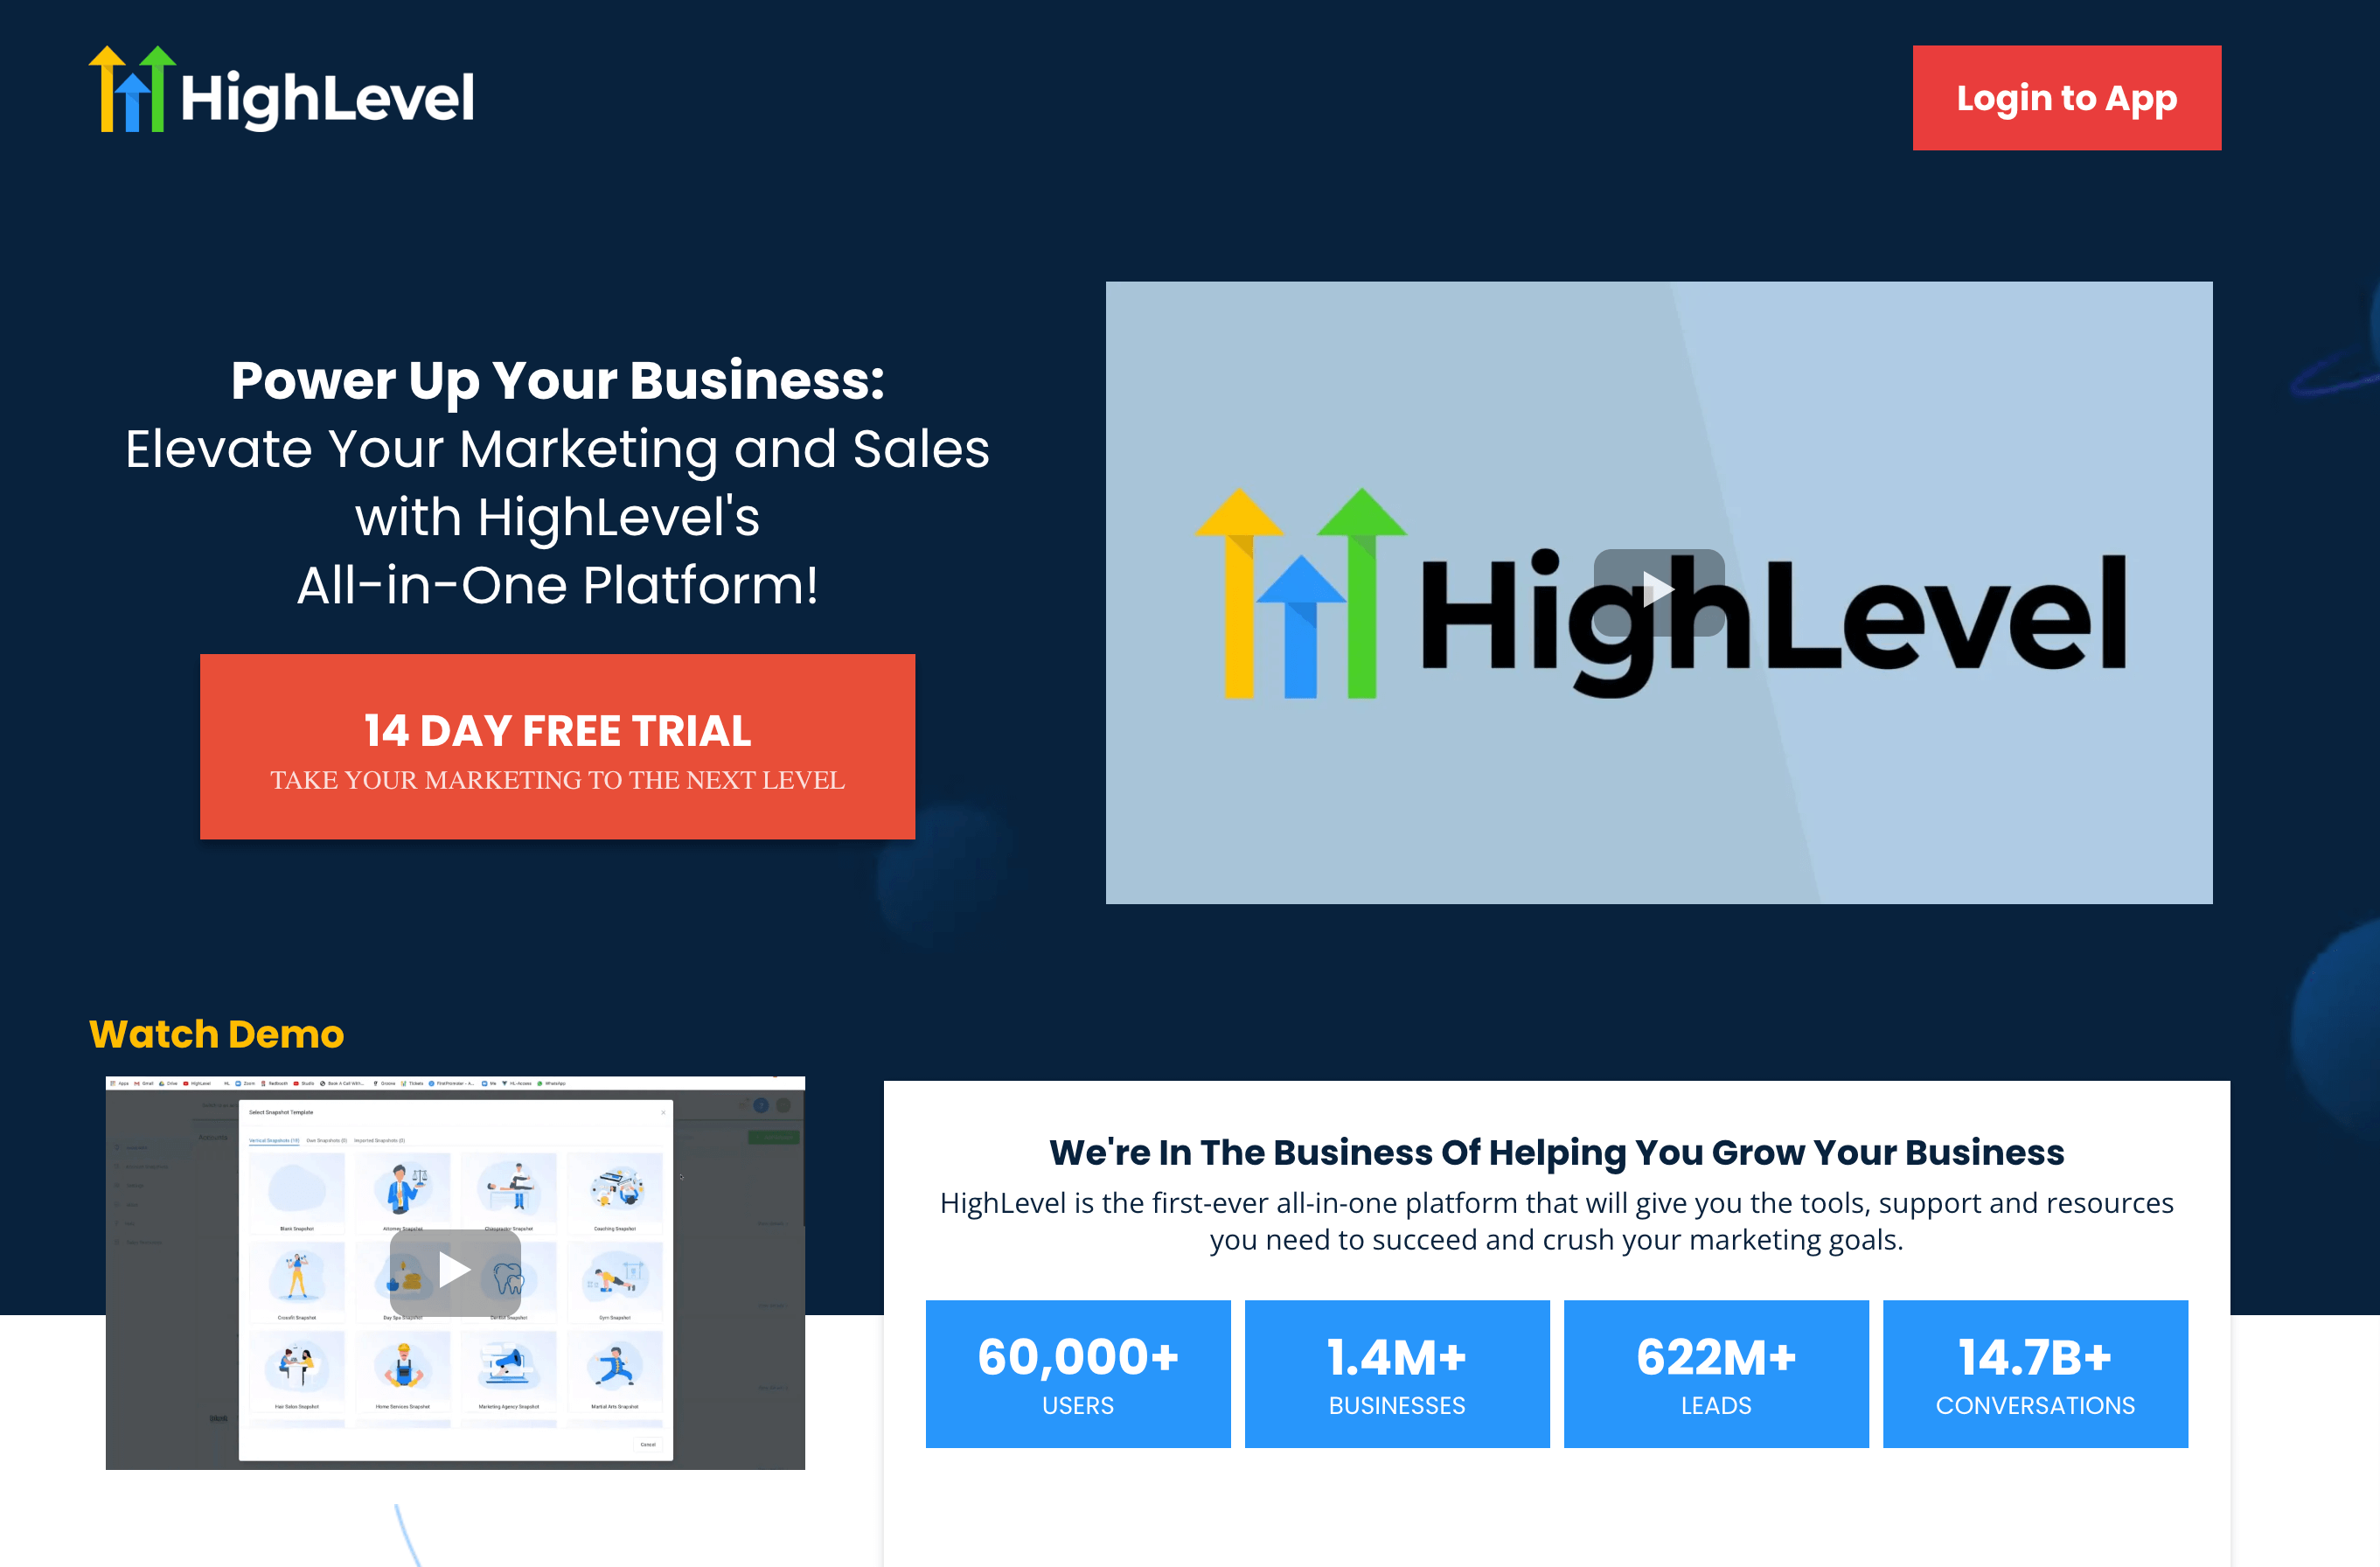 Go High Level